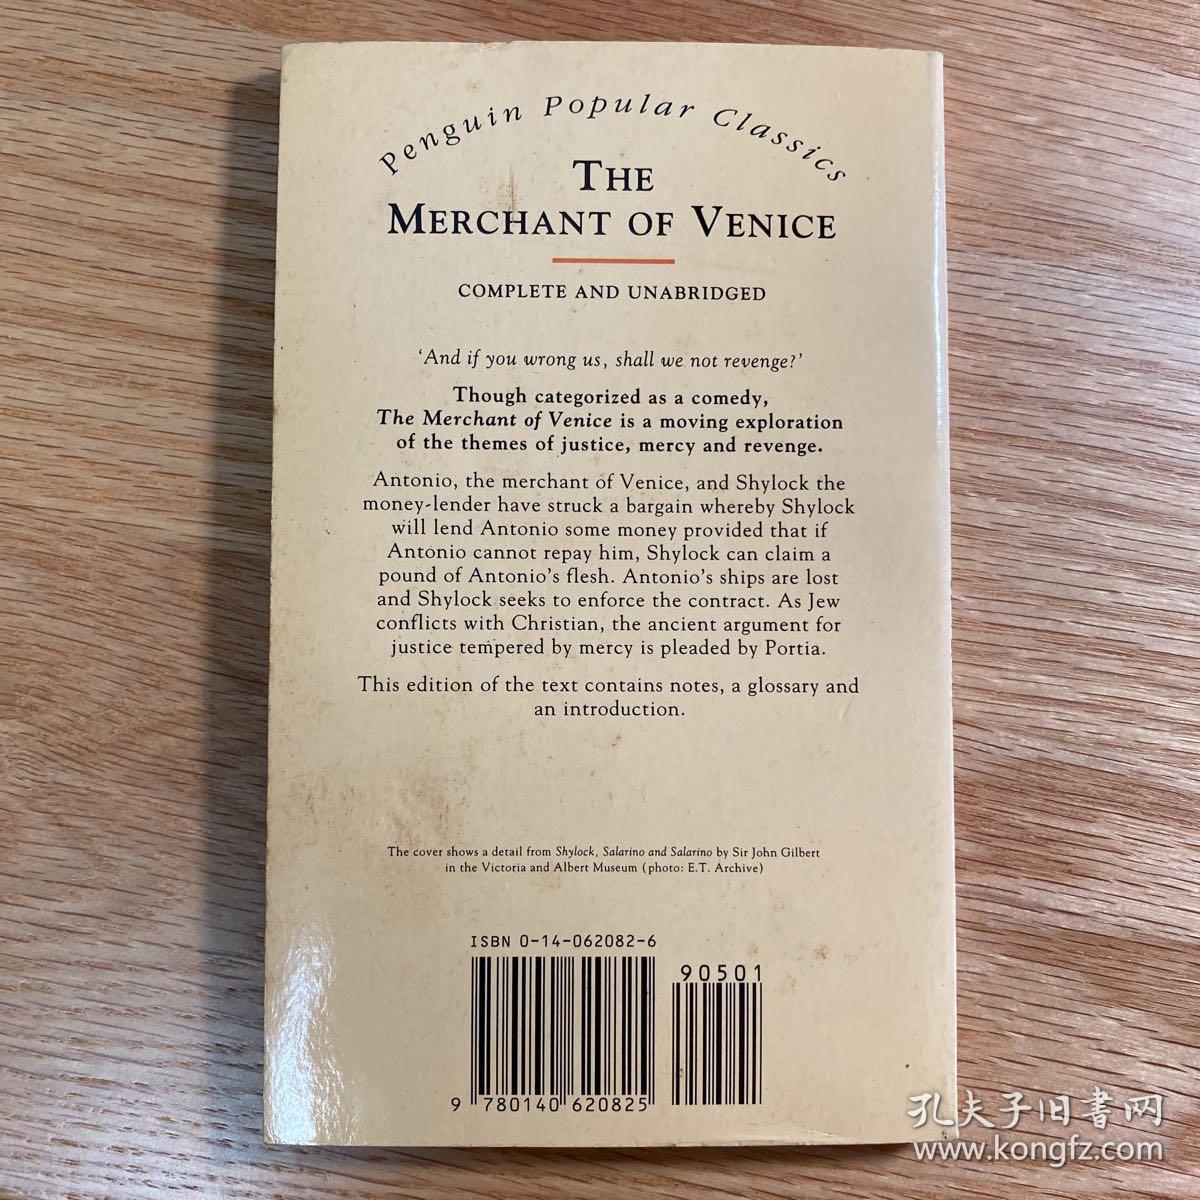 THE MERCHANT OF VENICE
威尼斯商人